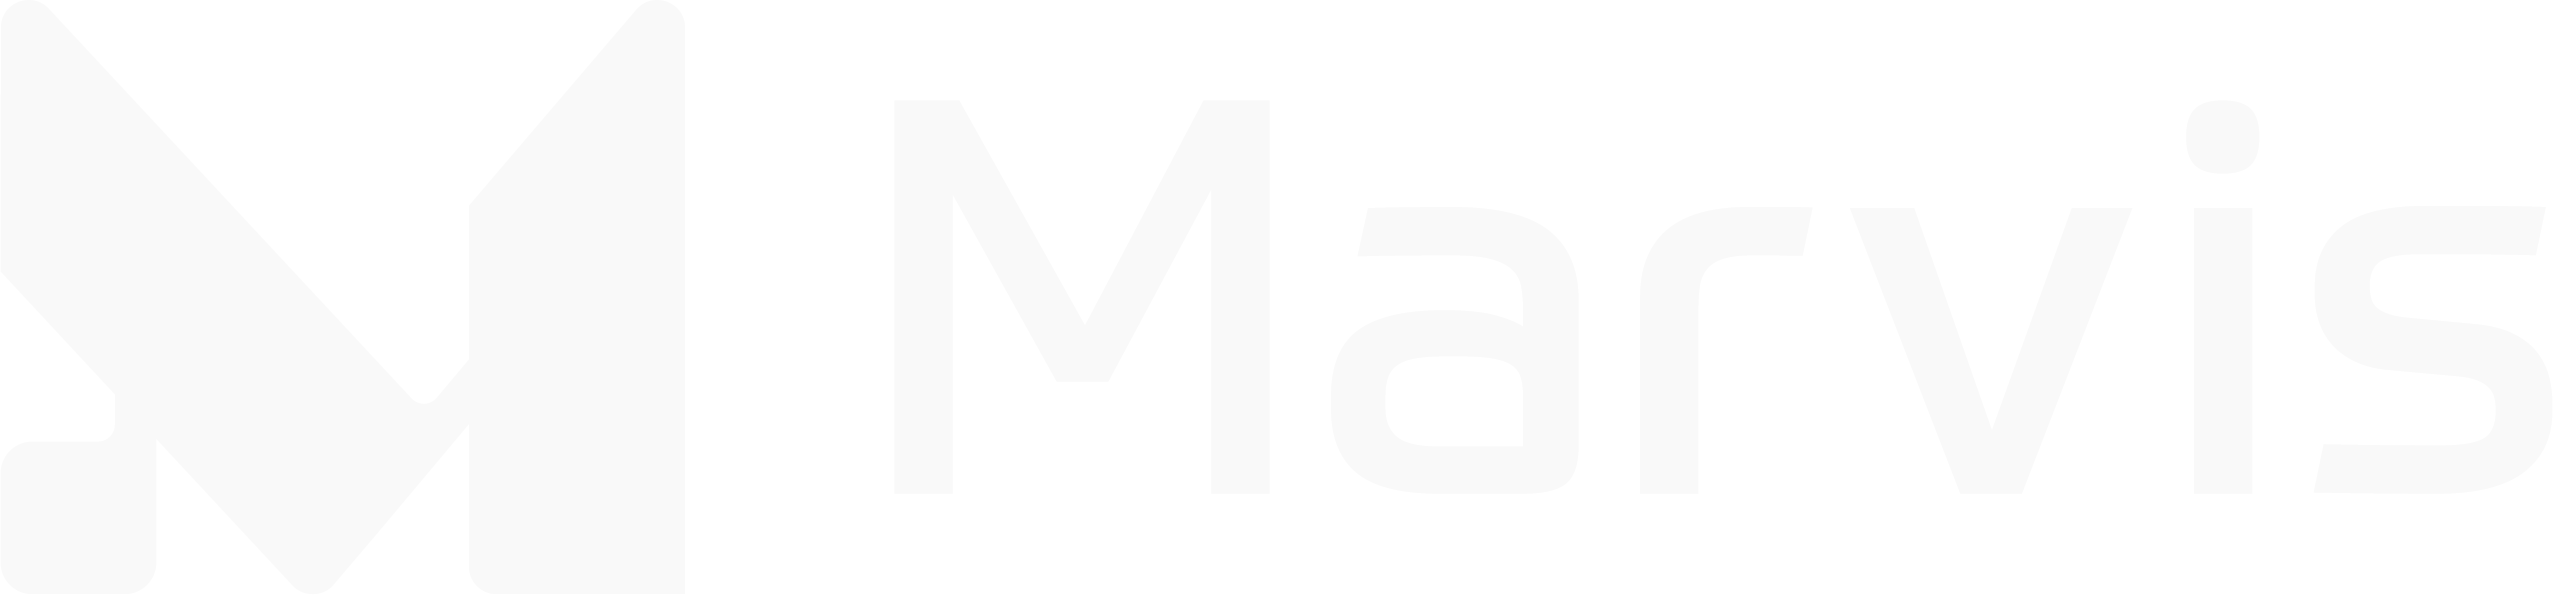 Marvis Header Image